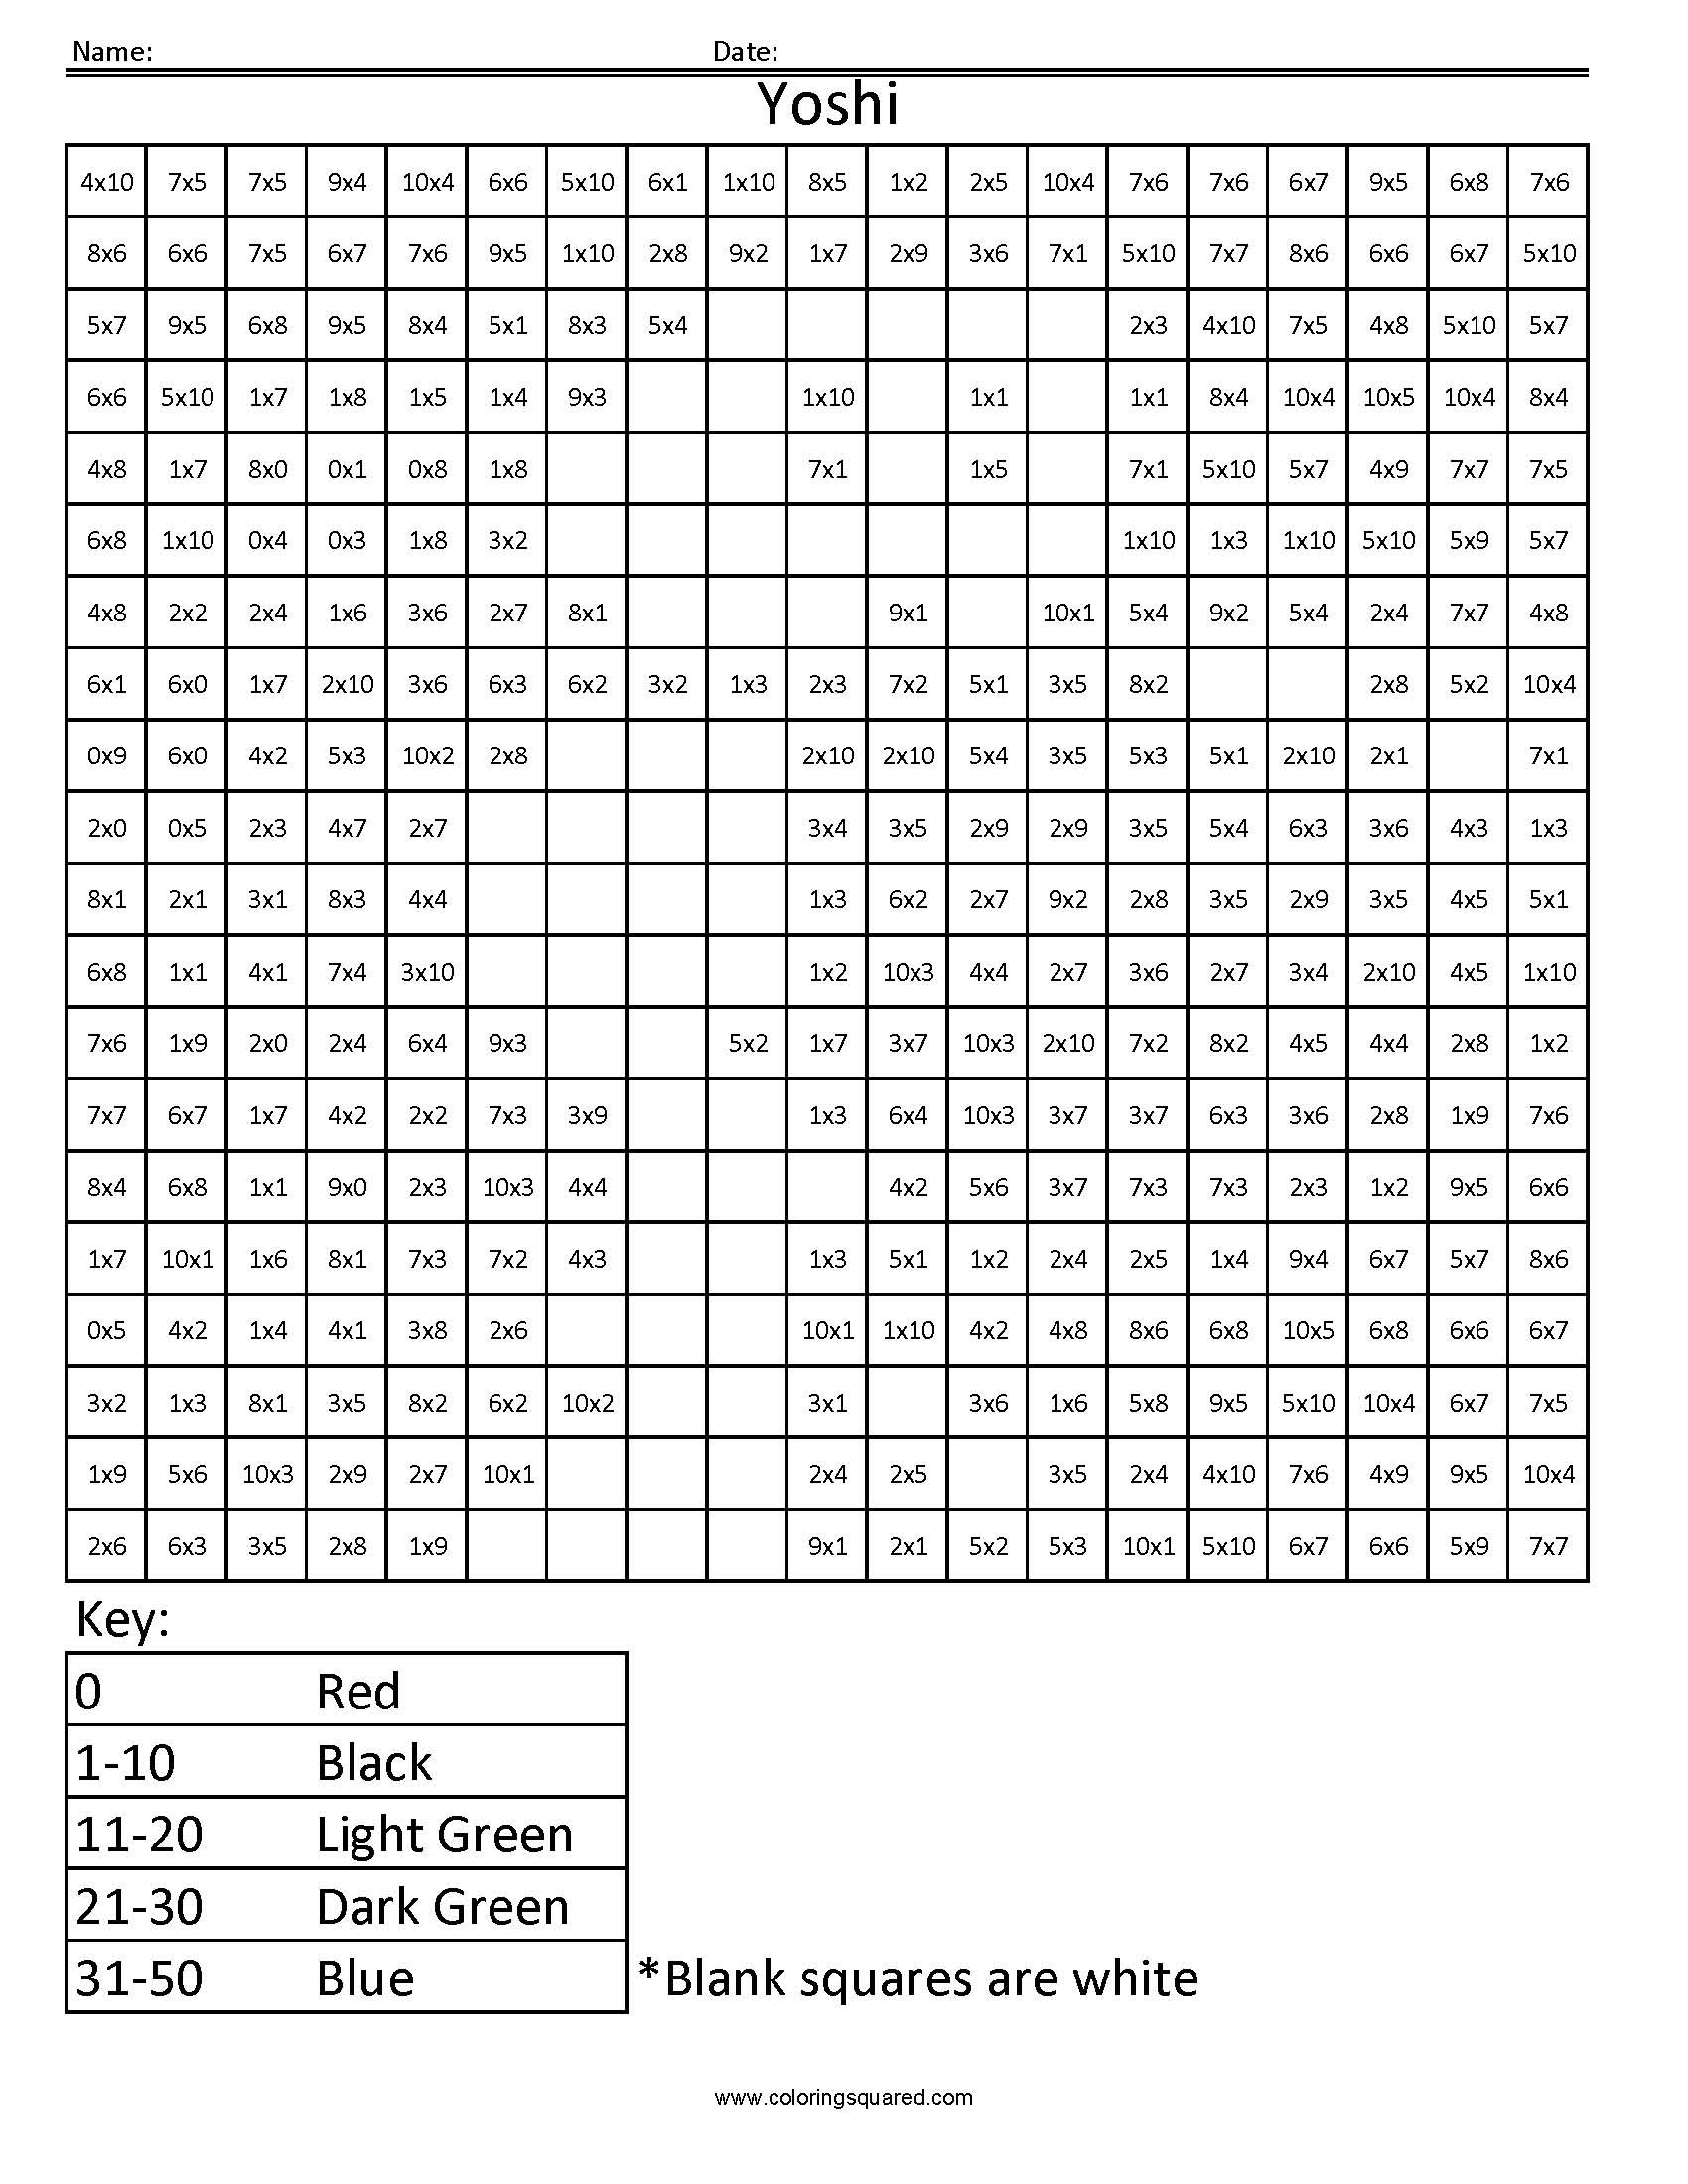 Coloring Squared Worksheets Yoshi Basic Multiplication Coloring Squared